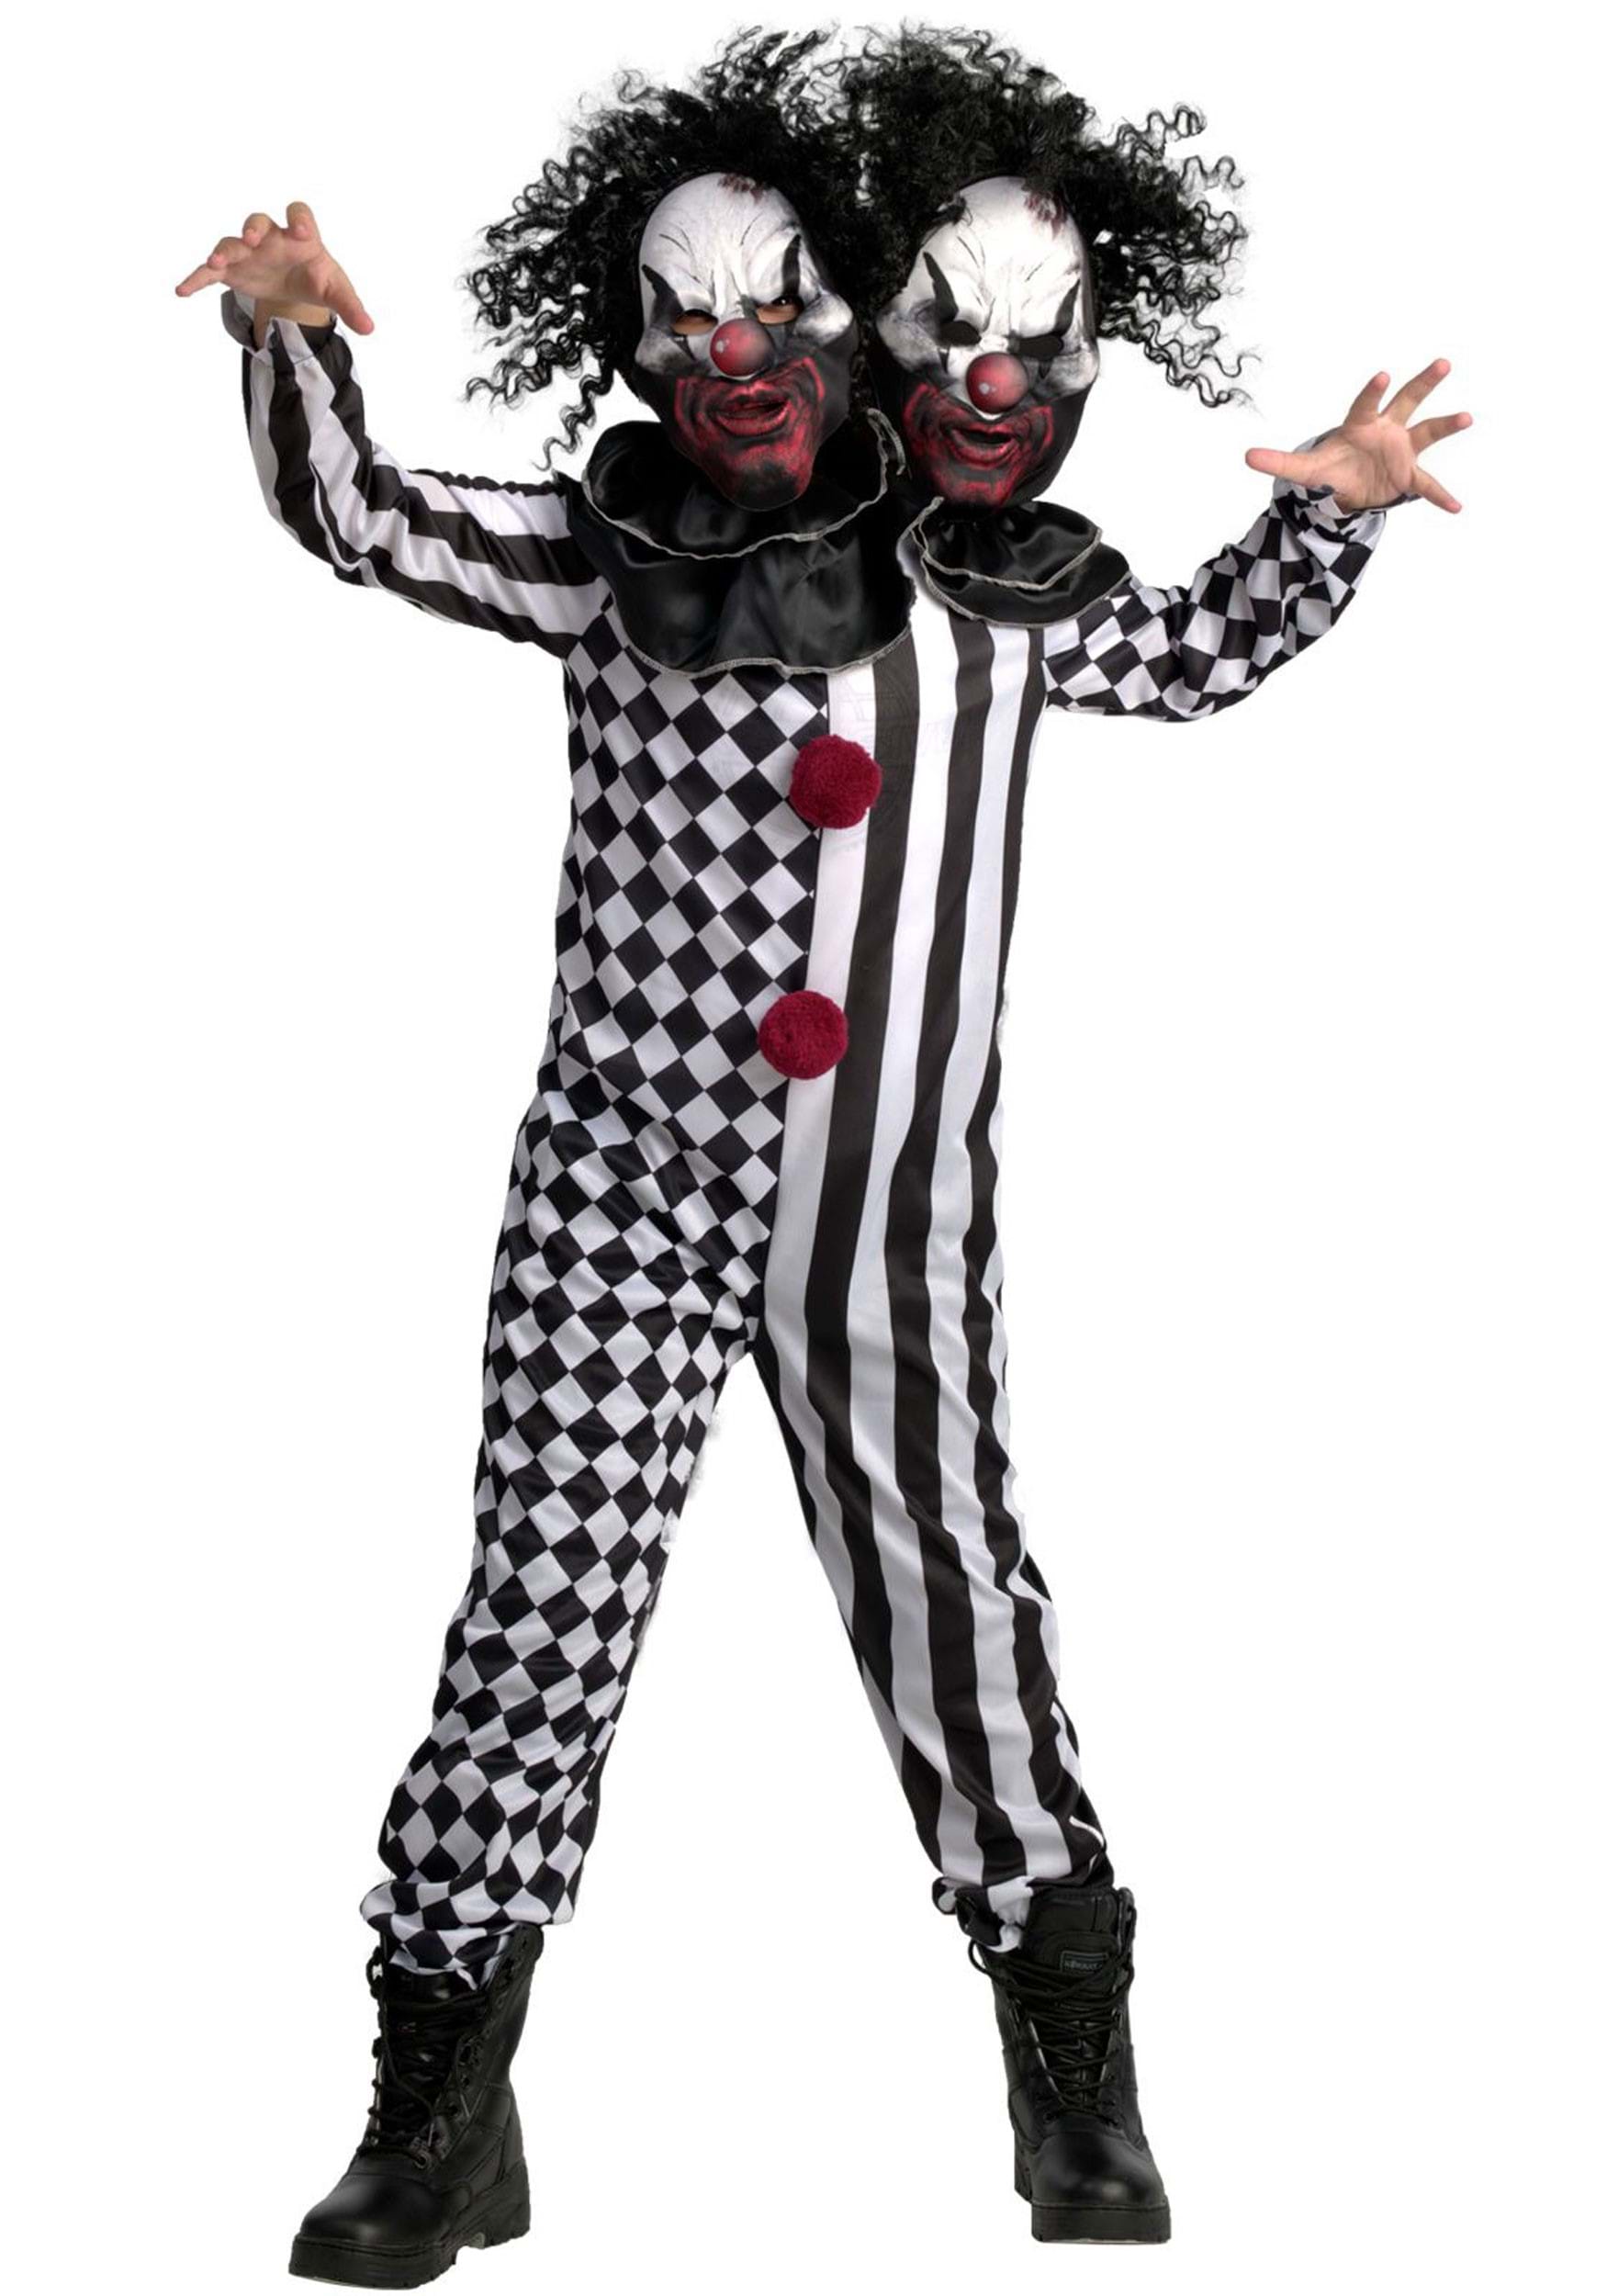 Kid’s Two-Headed Clown Costume